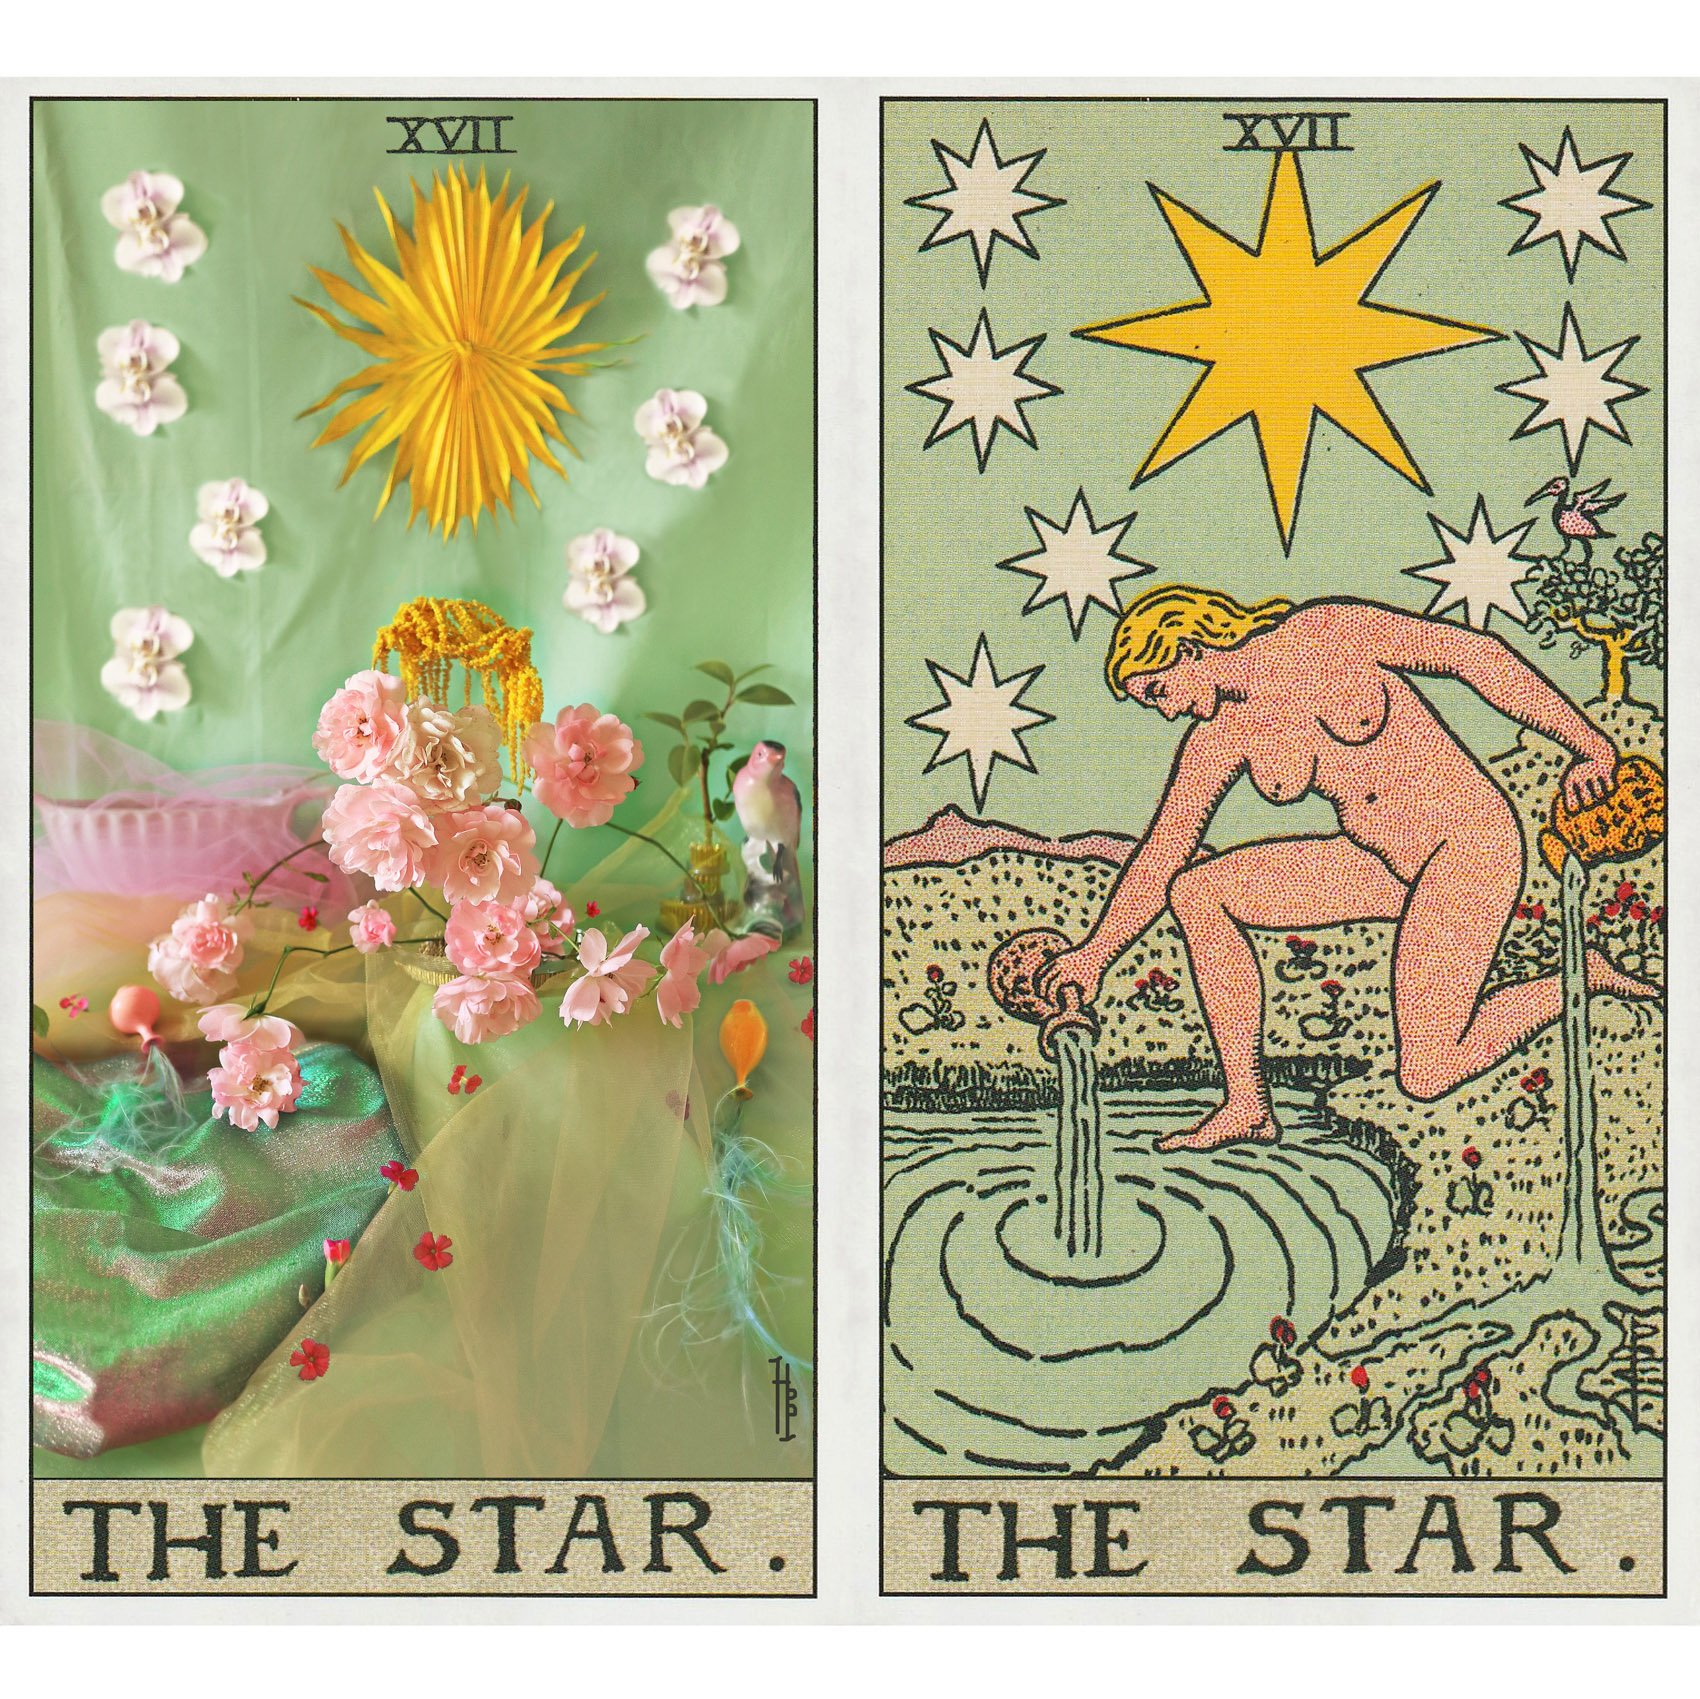 the star tarot-pamela colman smith - flower interpretation harriet parry.web copy.jpg